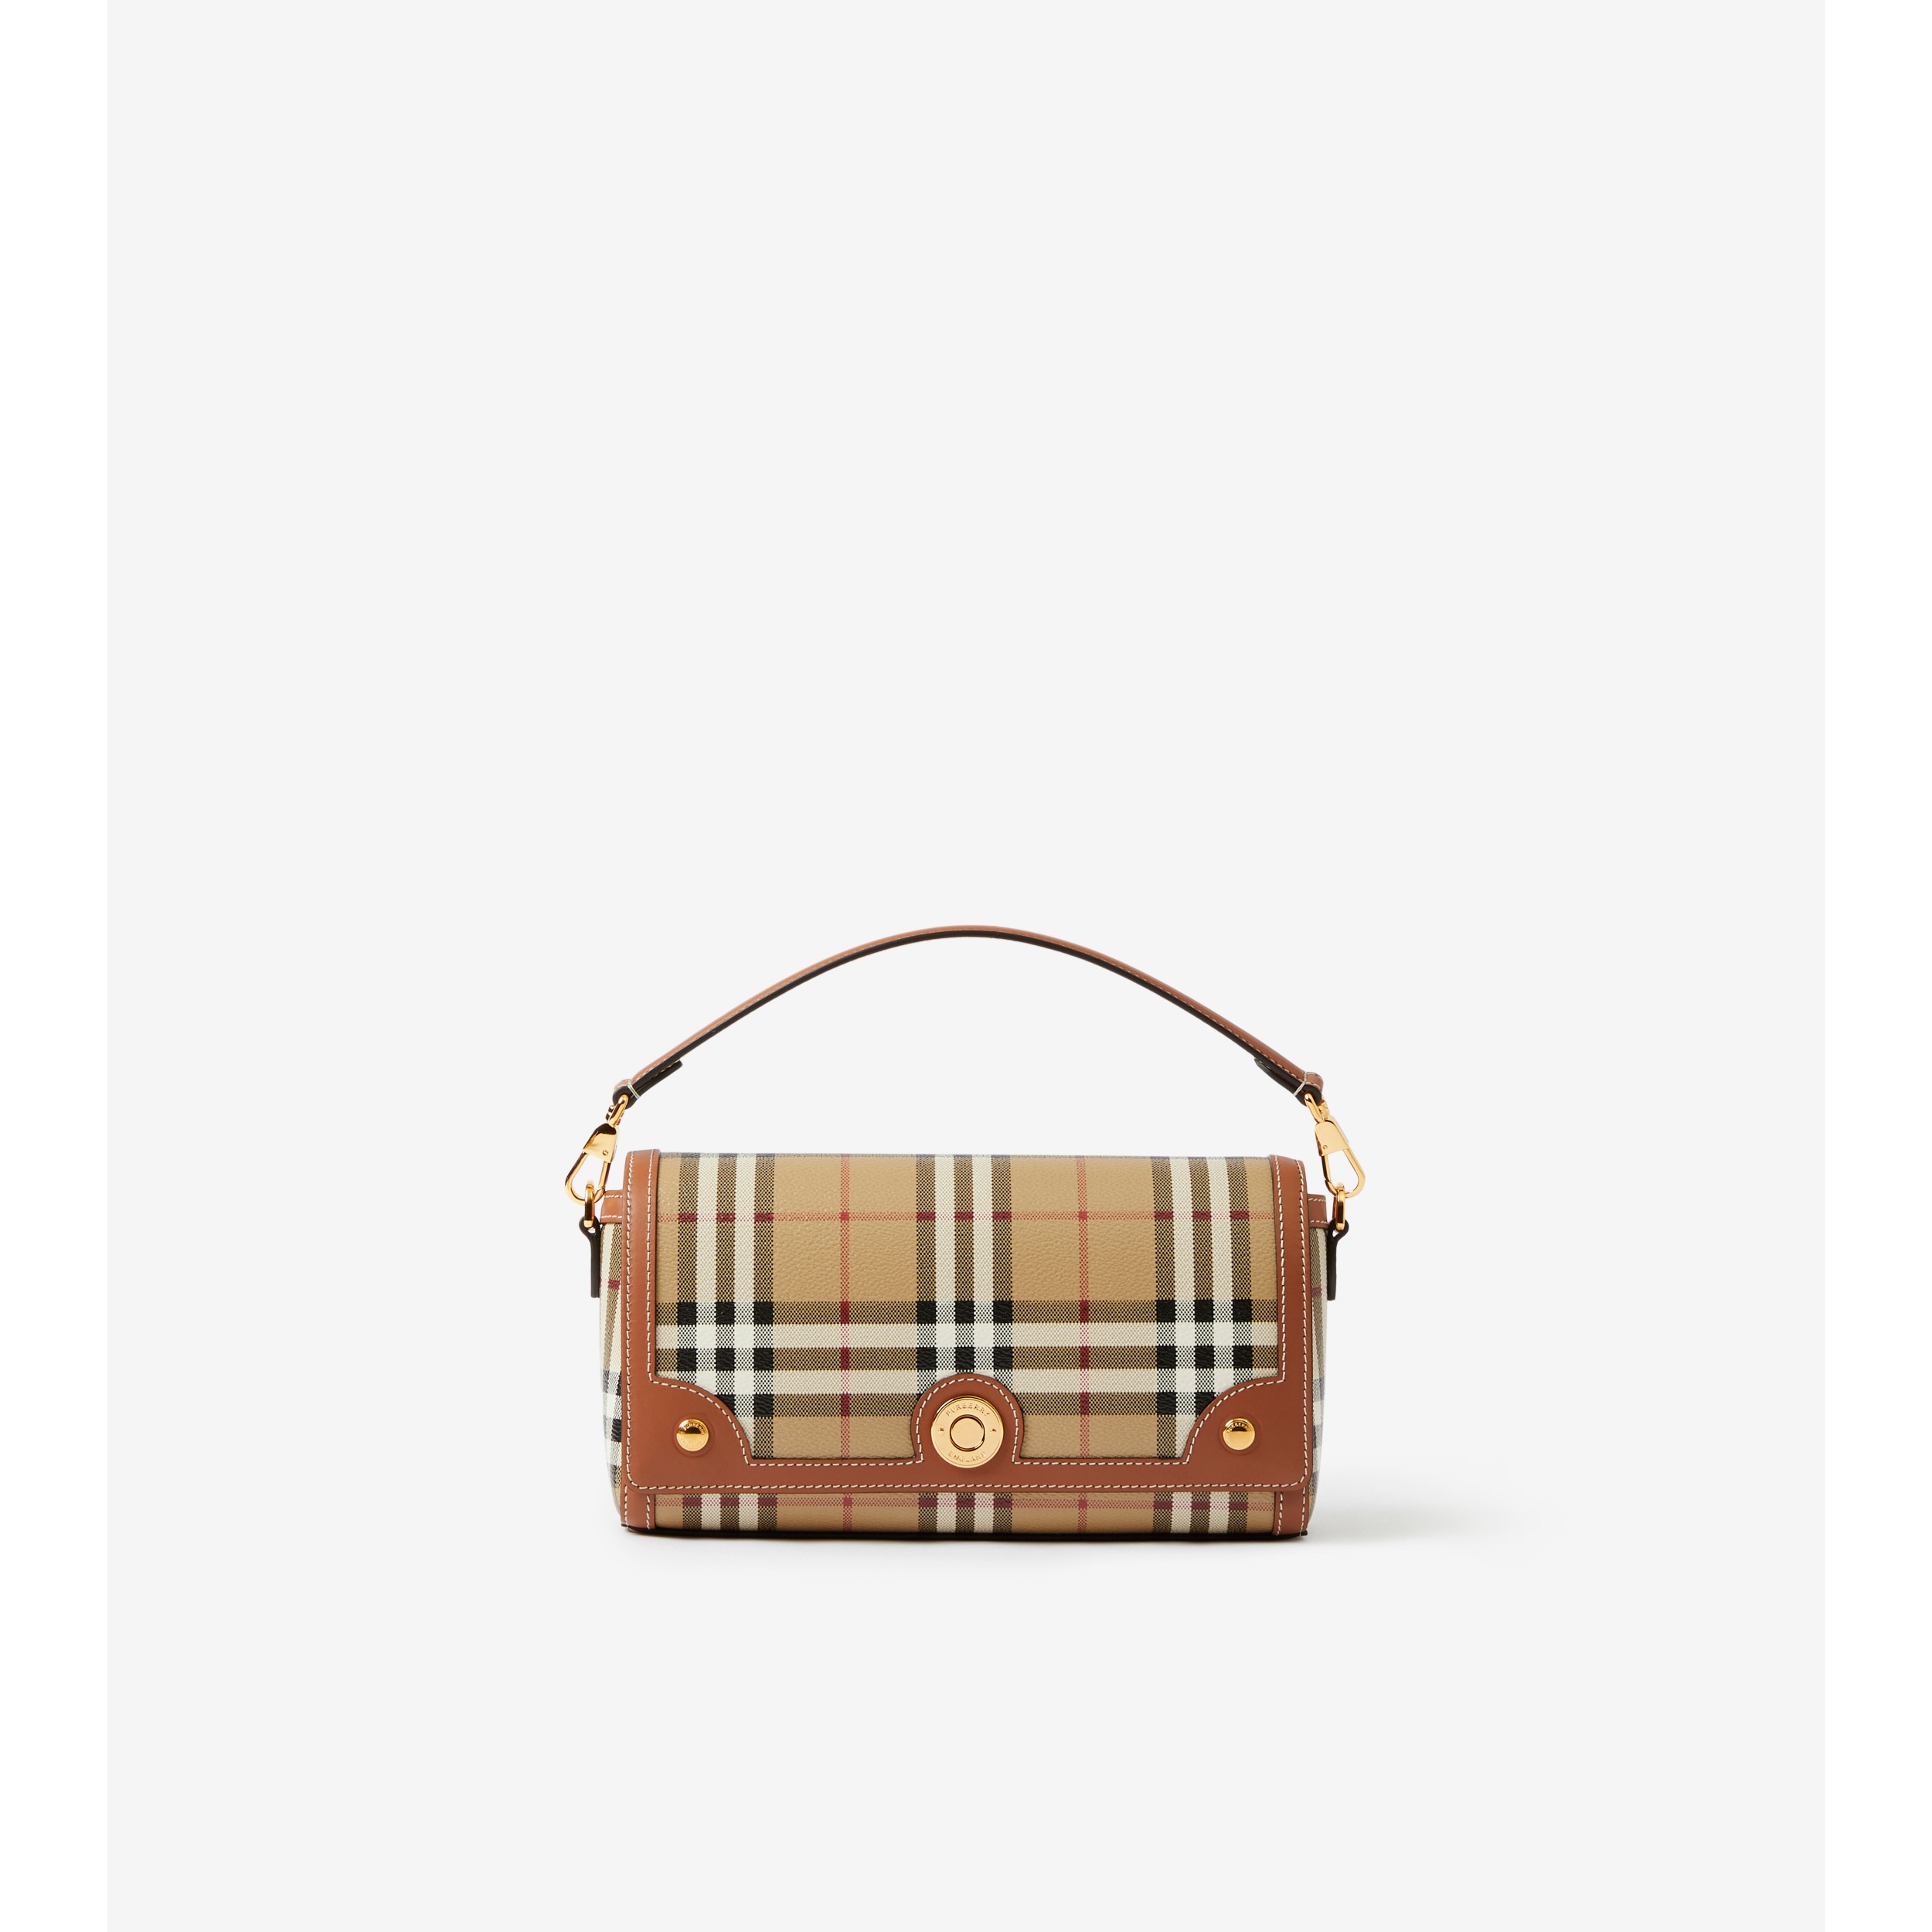 Burberry, Bags, Vintage Burberry Weekend Handbag In Very Good Condition  Handle Adjustable